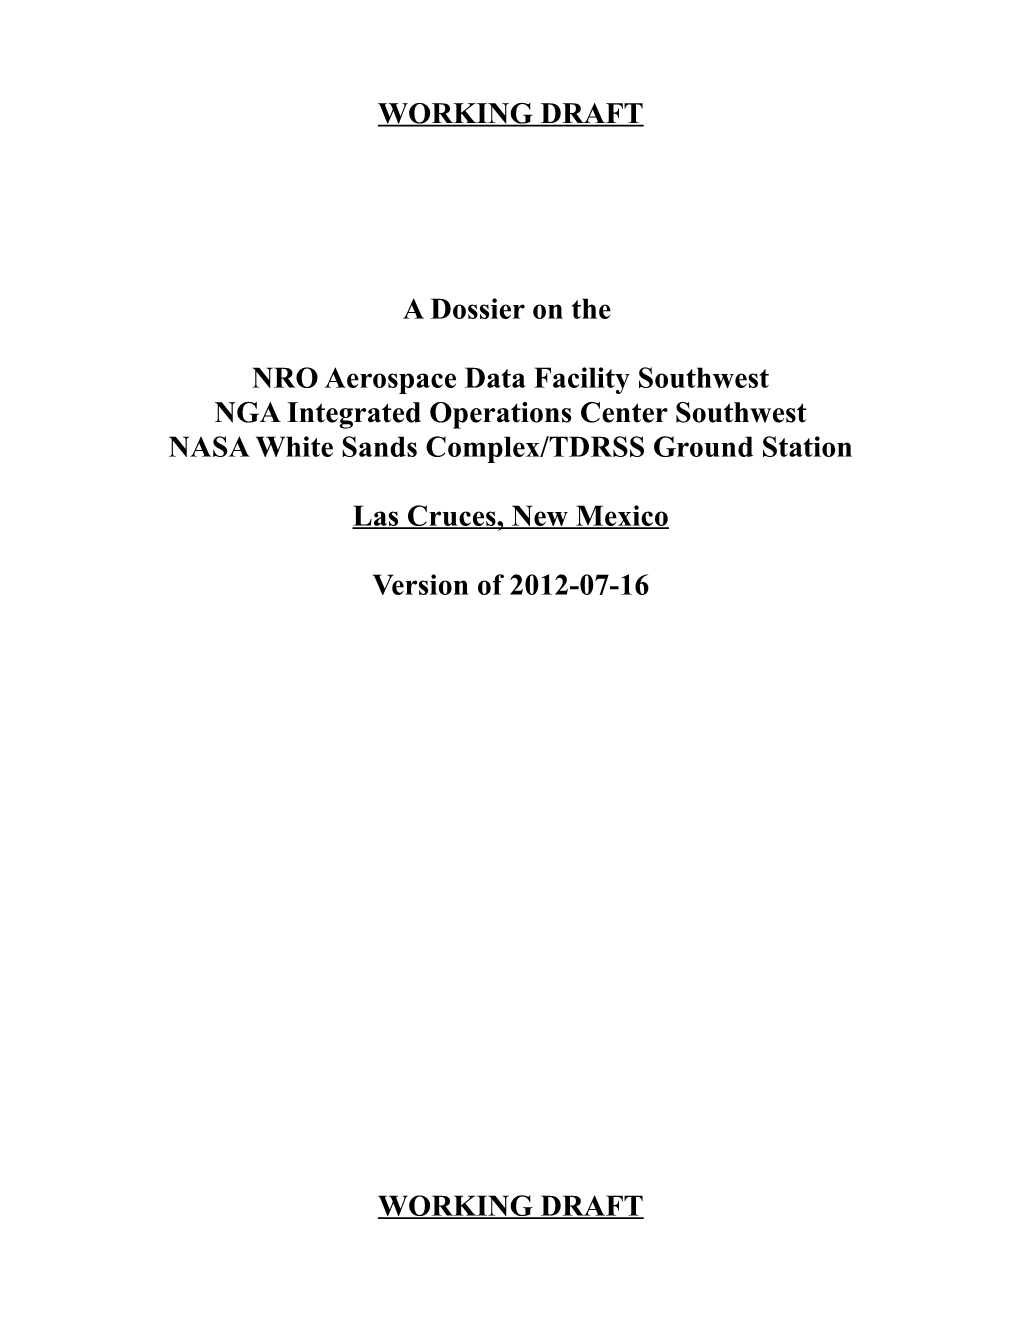 A Dossier on the NRO Aerospace Data Facility Southwest